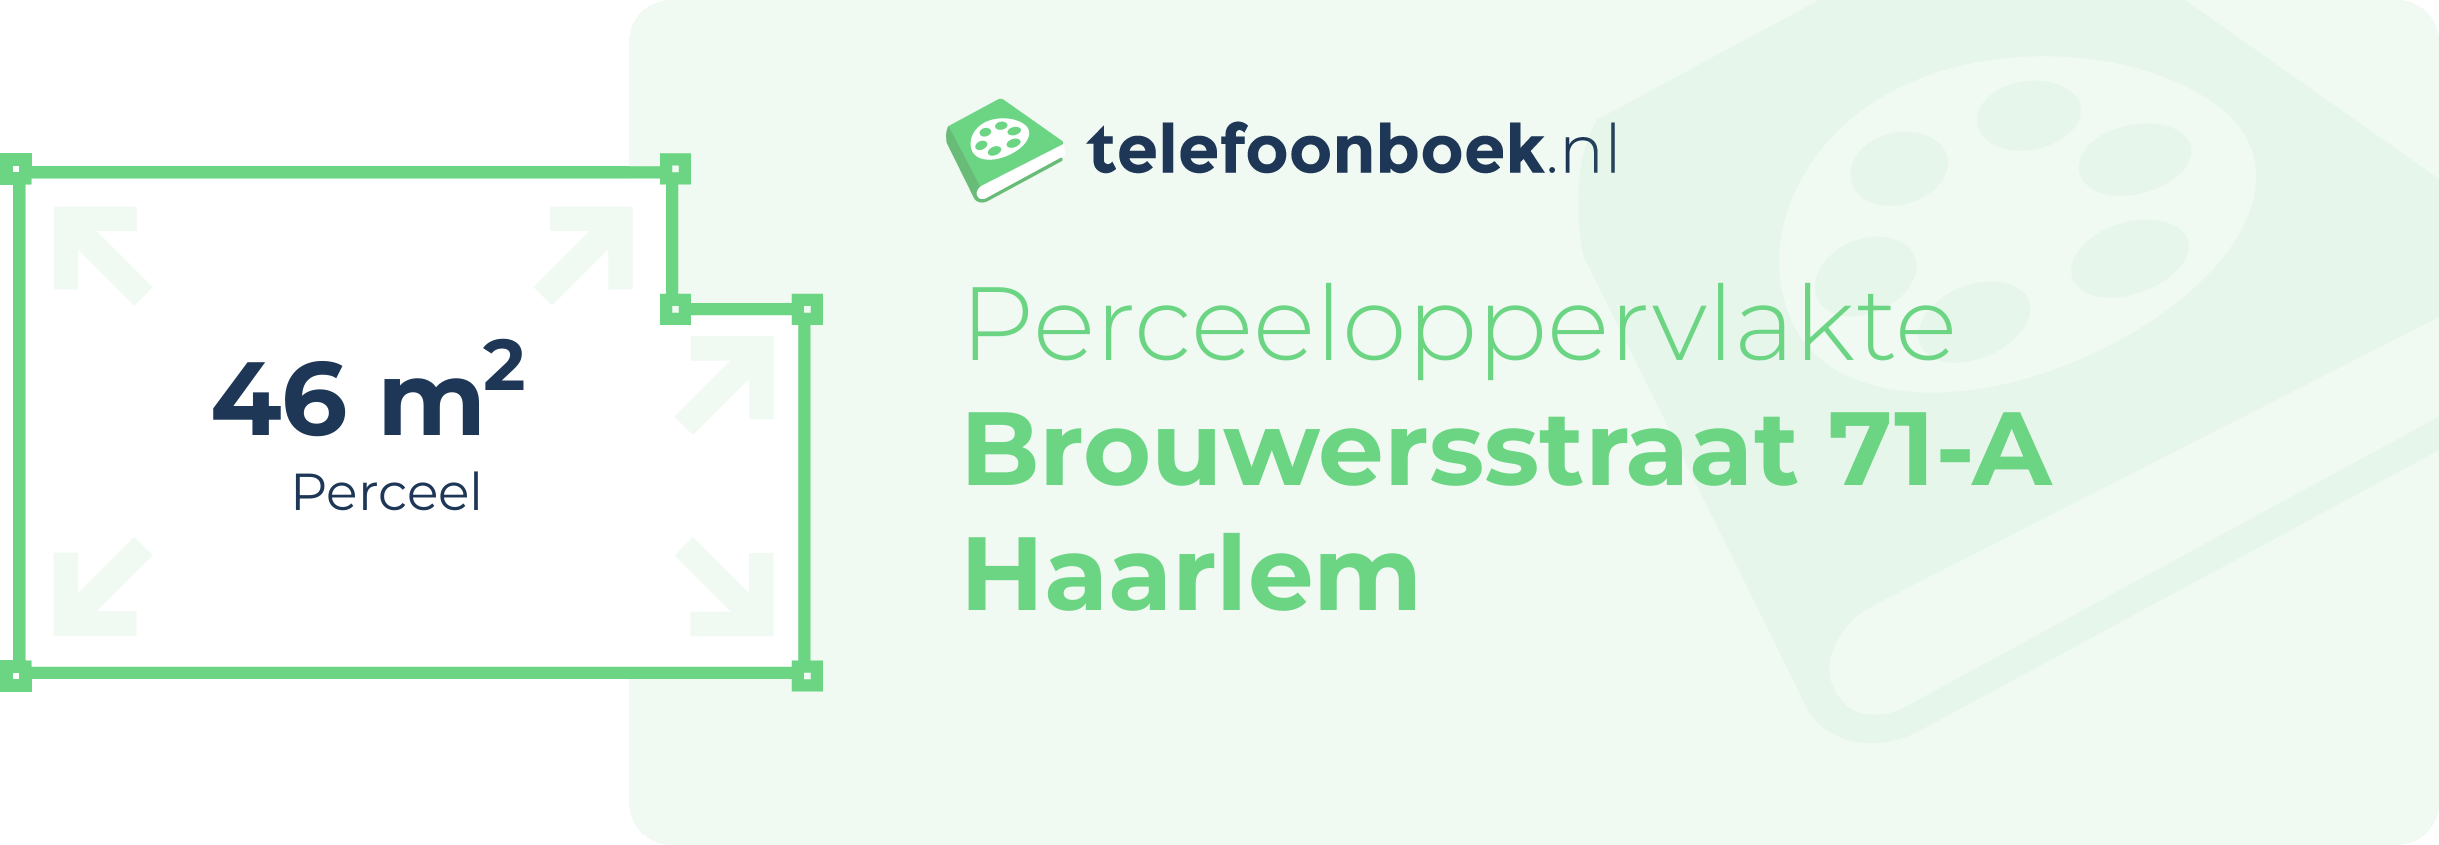 Perceeloppervlakte Brouwersstraat 71-A Haarlem